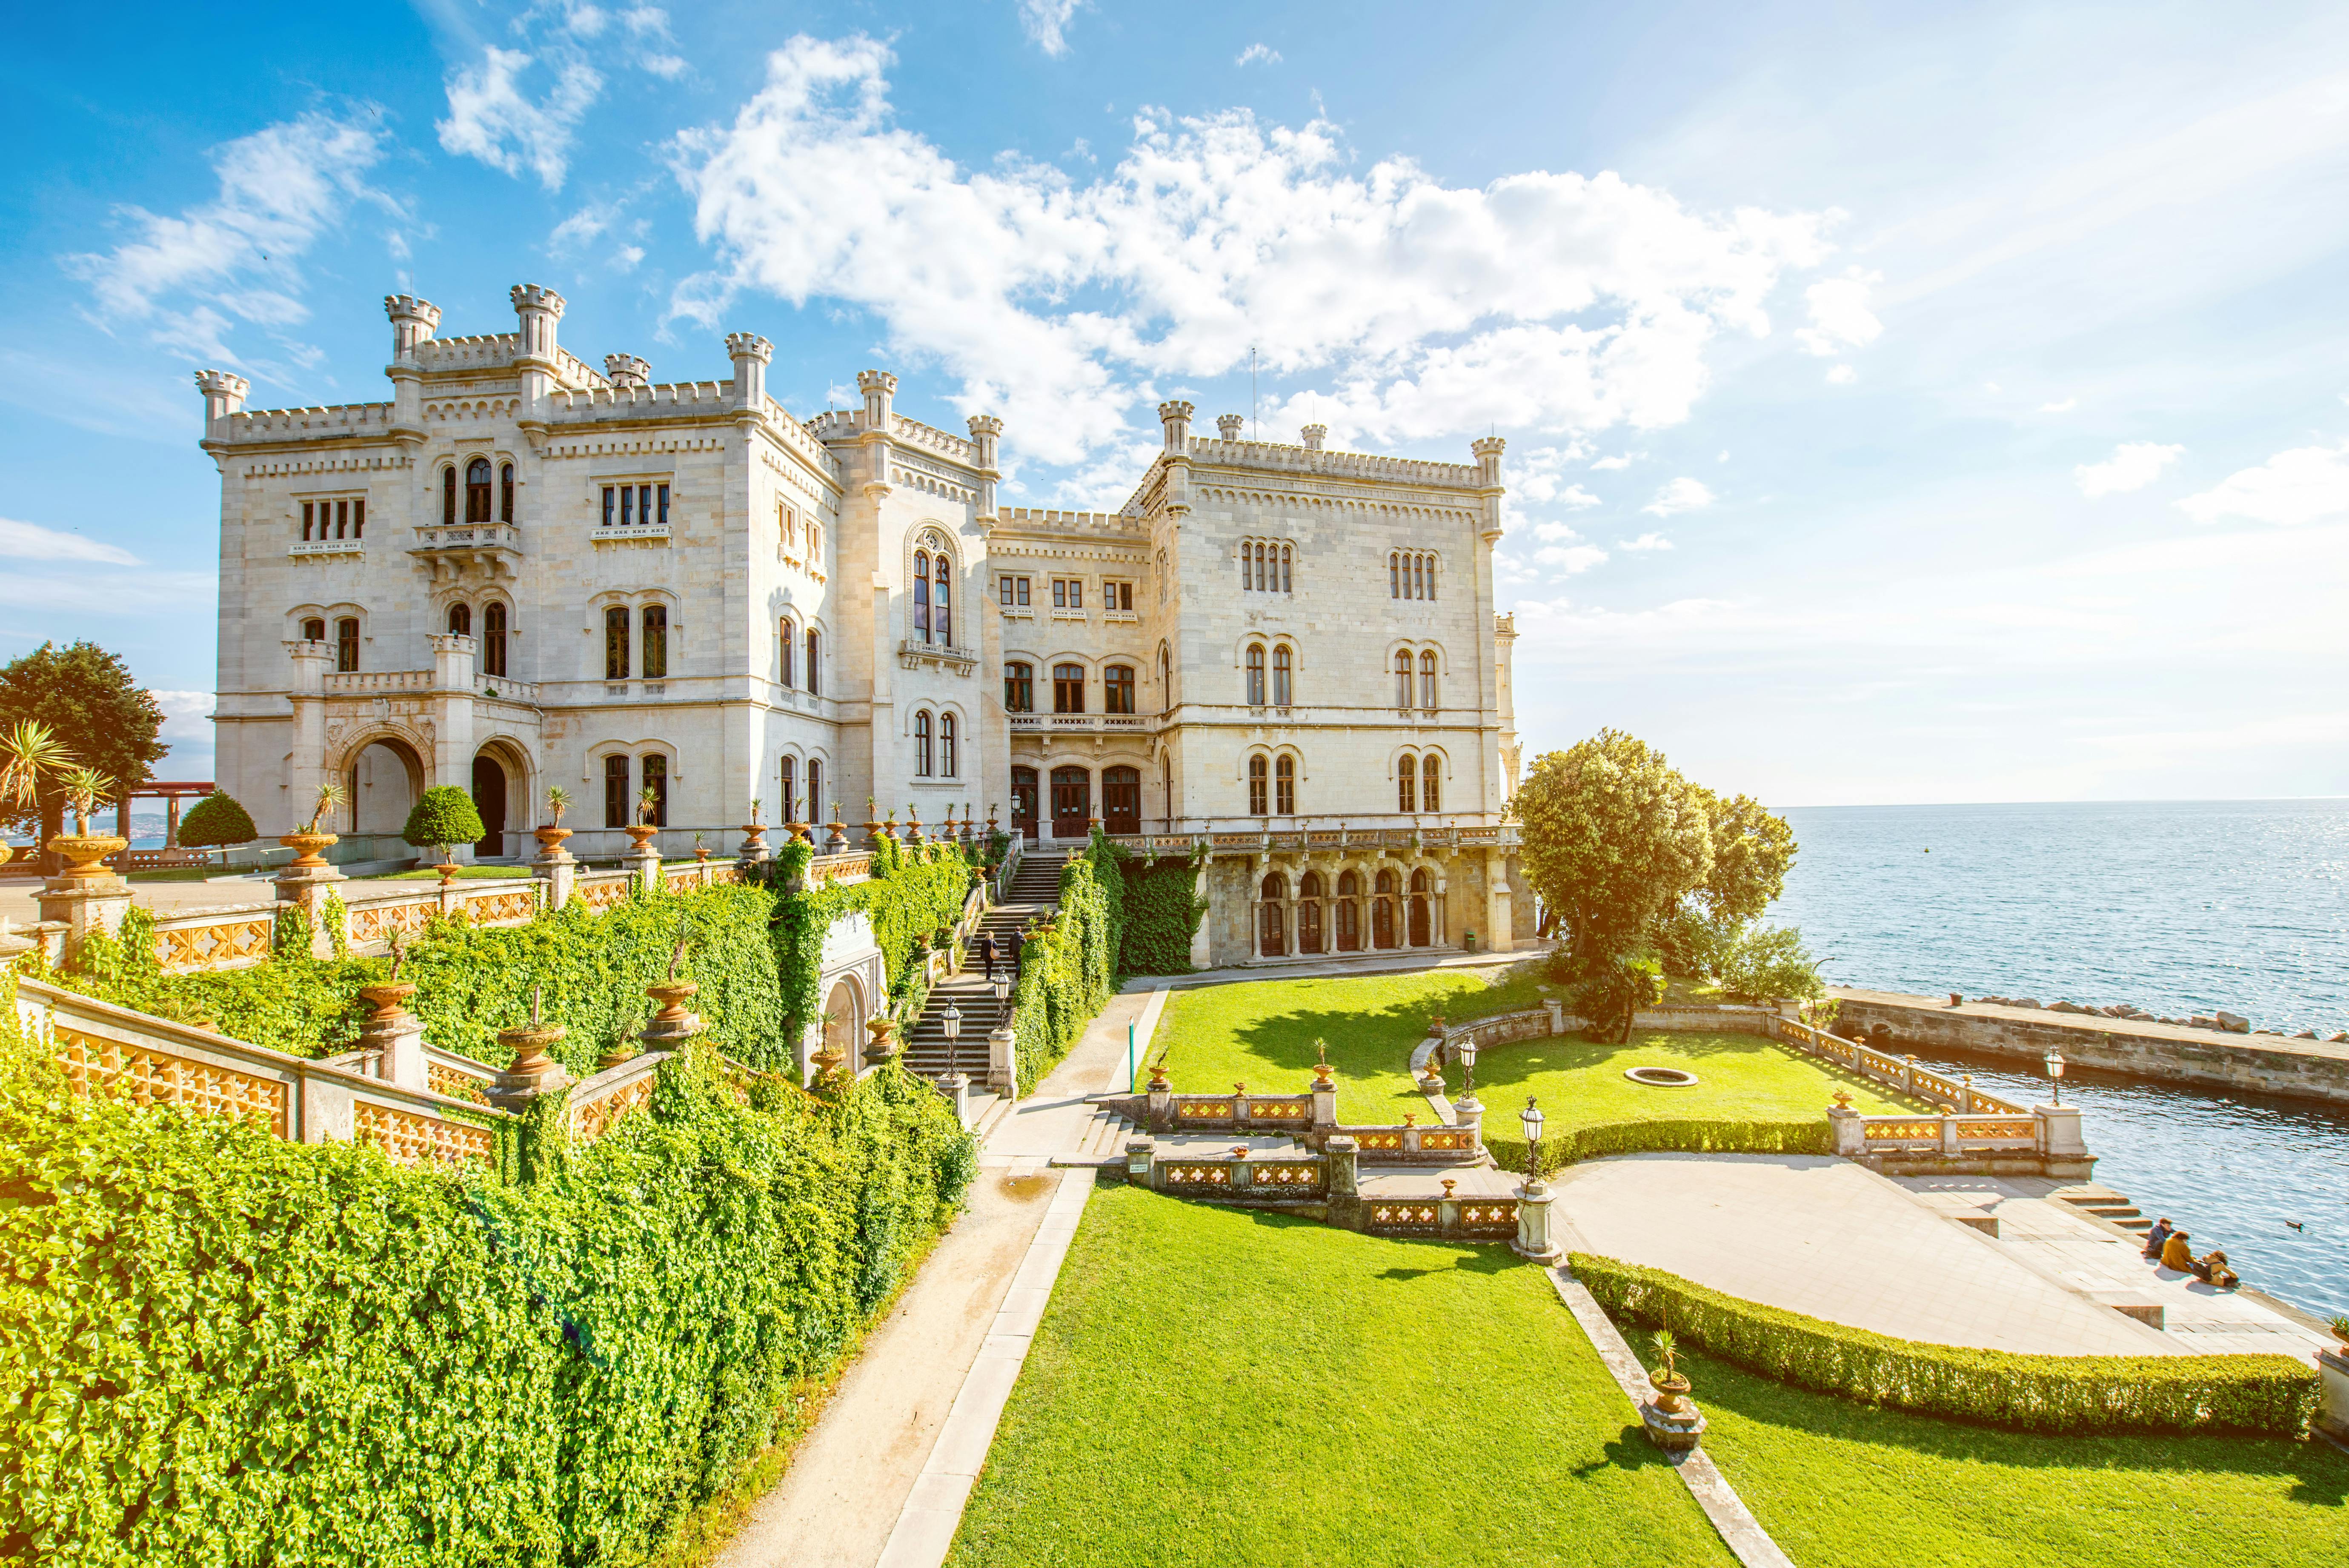 Tickets to Miramare Castle in Trieste Musement